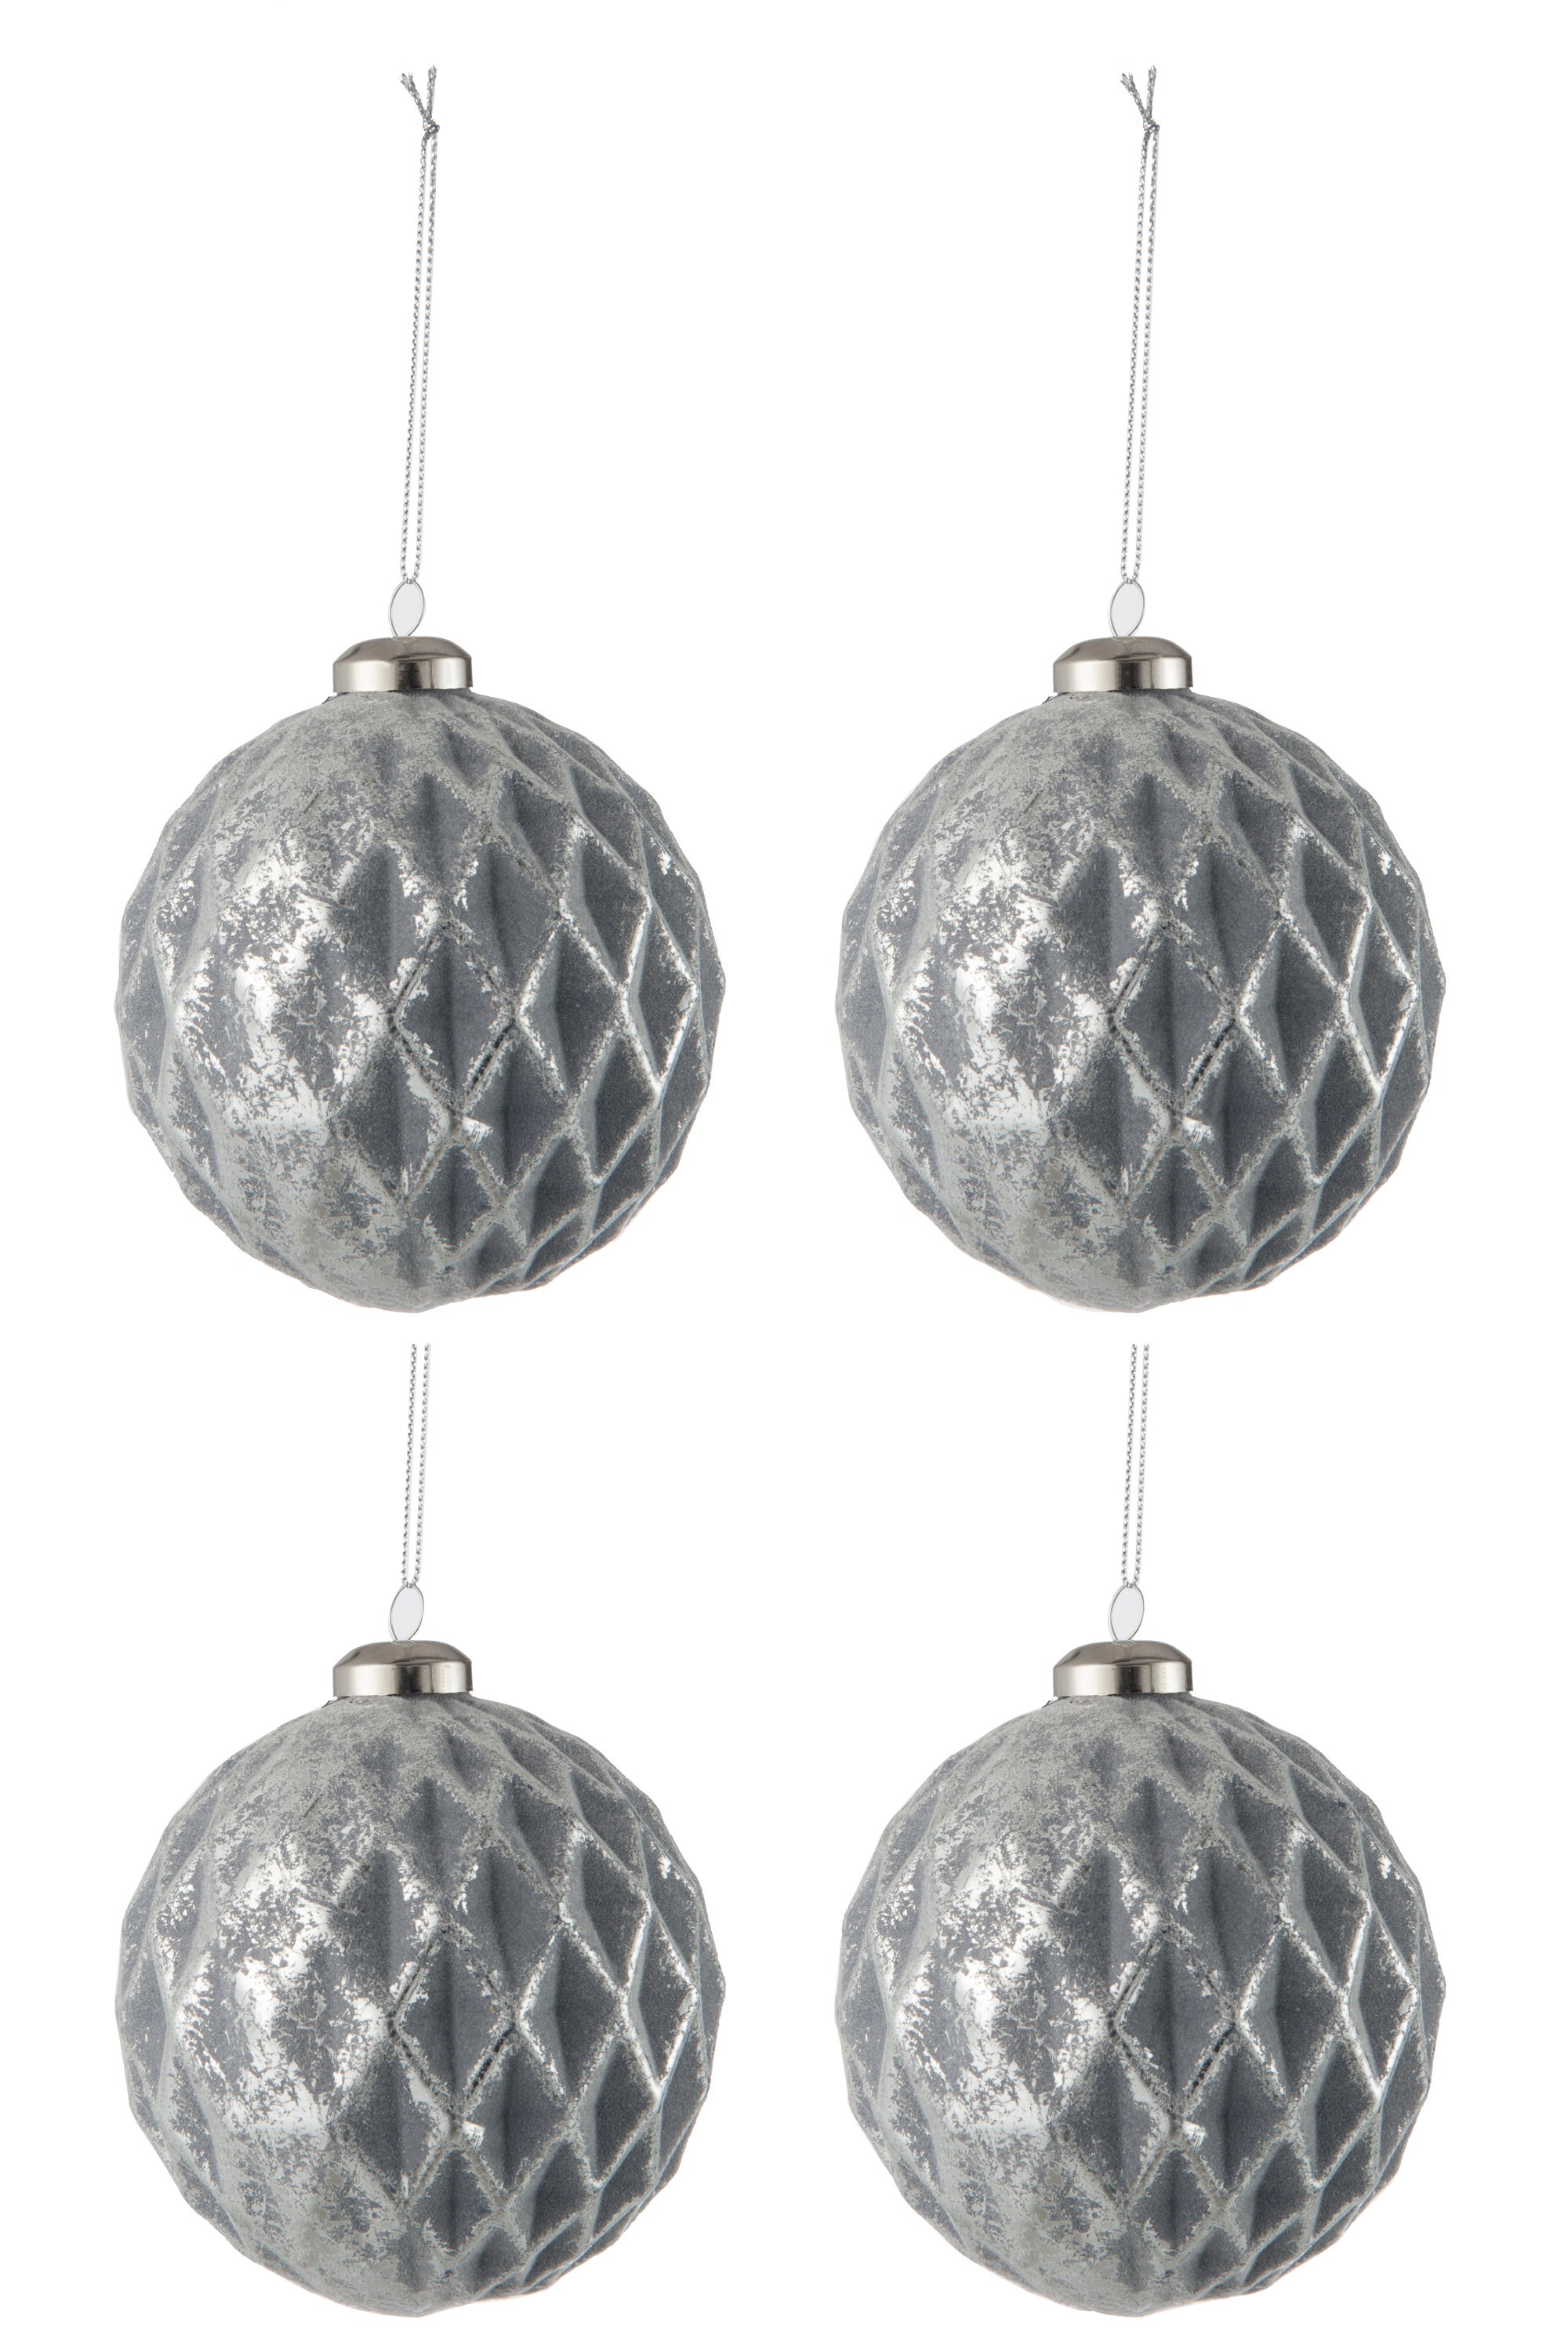 Sada šedých vánočních koulí se stříbrnou patinou ( 4ks) - 10*10*9 cm J-Line by Jolipa